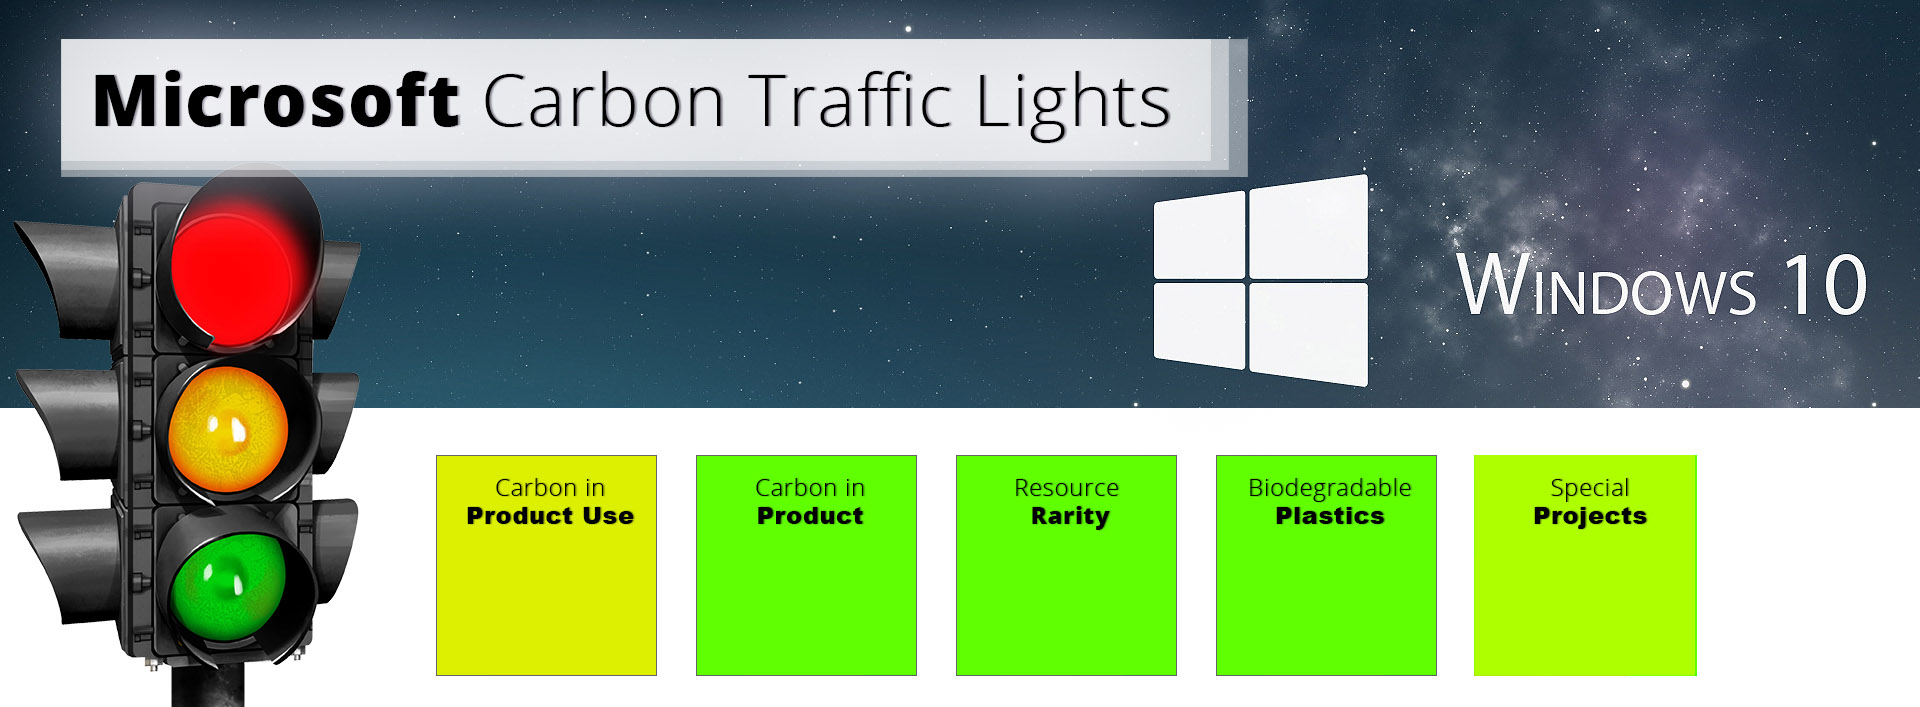 Microsoft__Carbon-Traffic-Lights